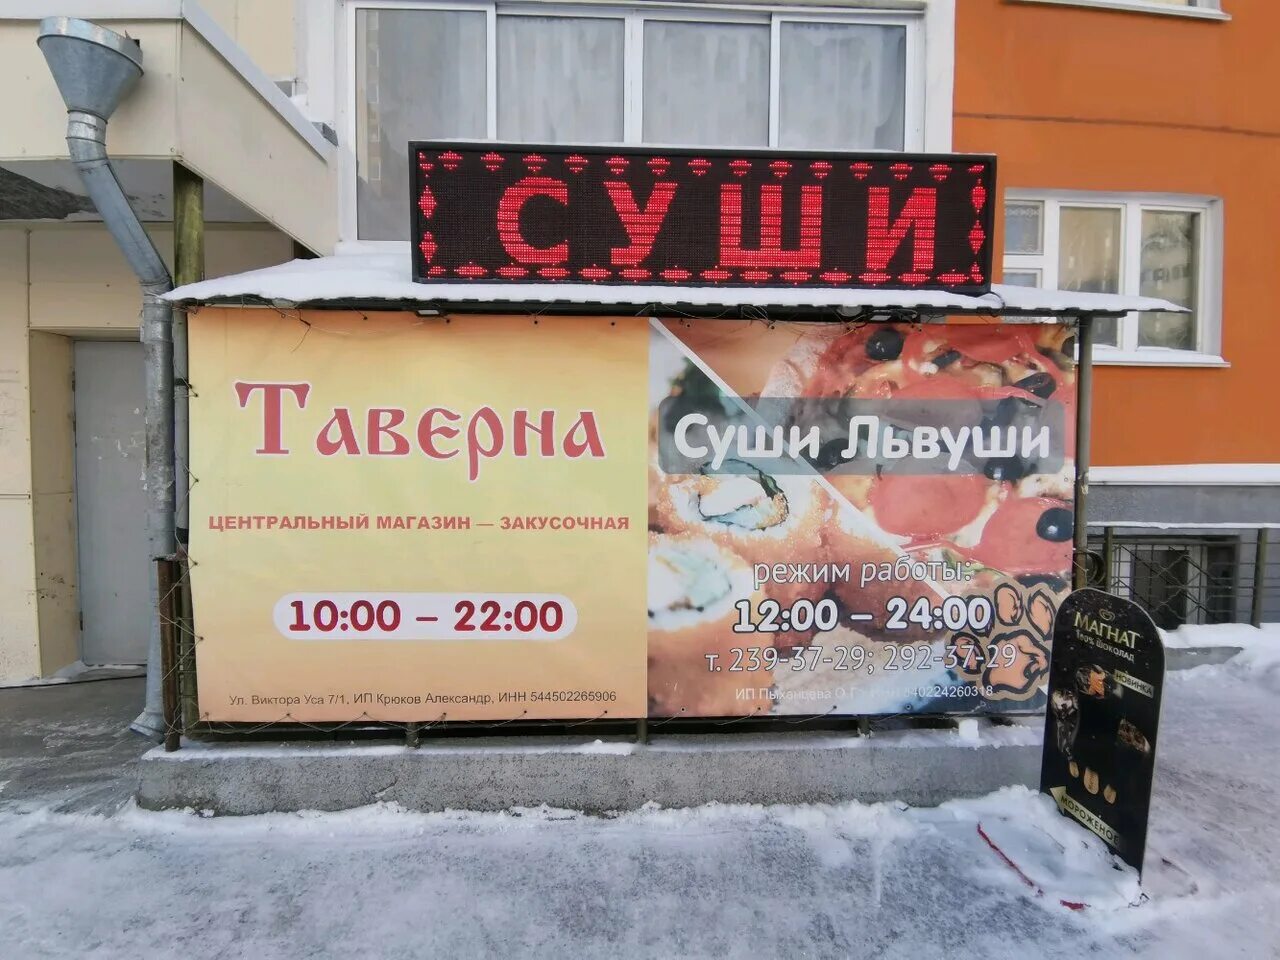 Суши львуши. Таверна в Новосибирске. Суши Виктора Уса 11. Магазин таверна режим раб.